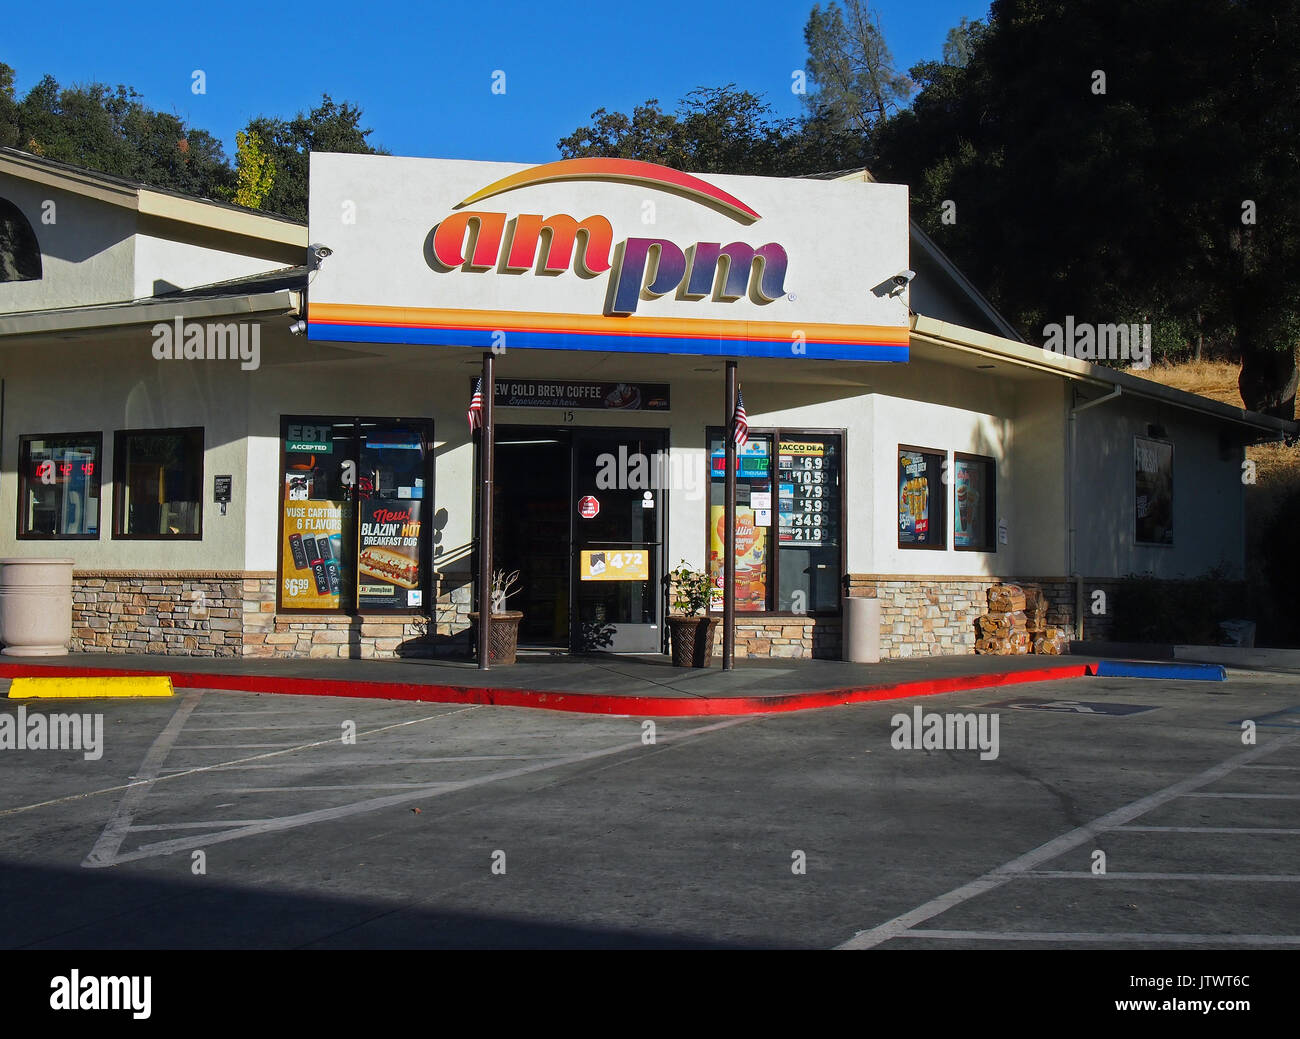 AM PM tienda en California Foto de stock